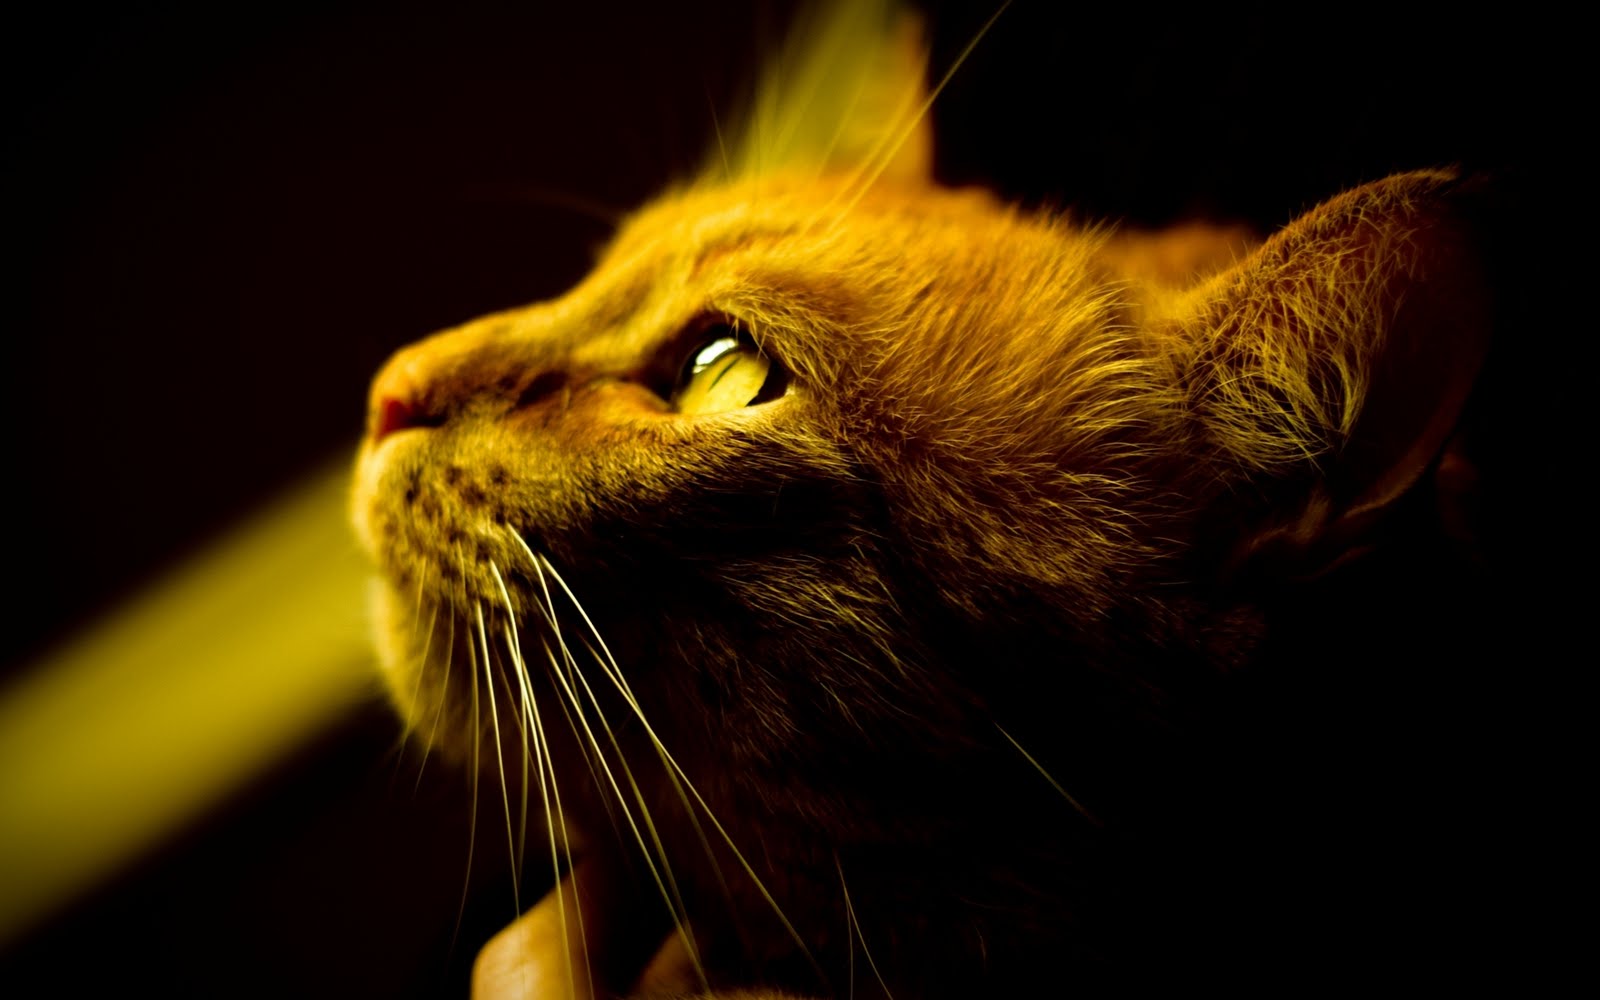 Cat In the light cool eye 1080p HD Wallpaper